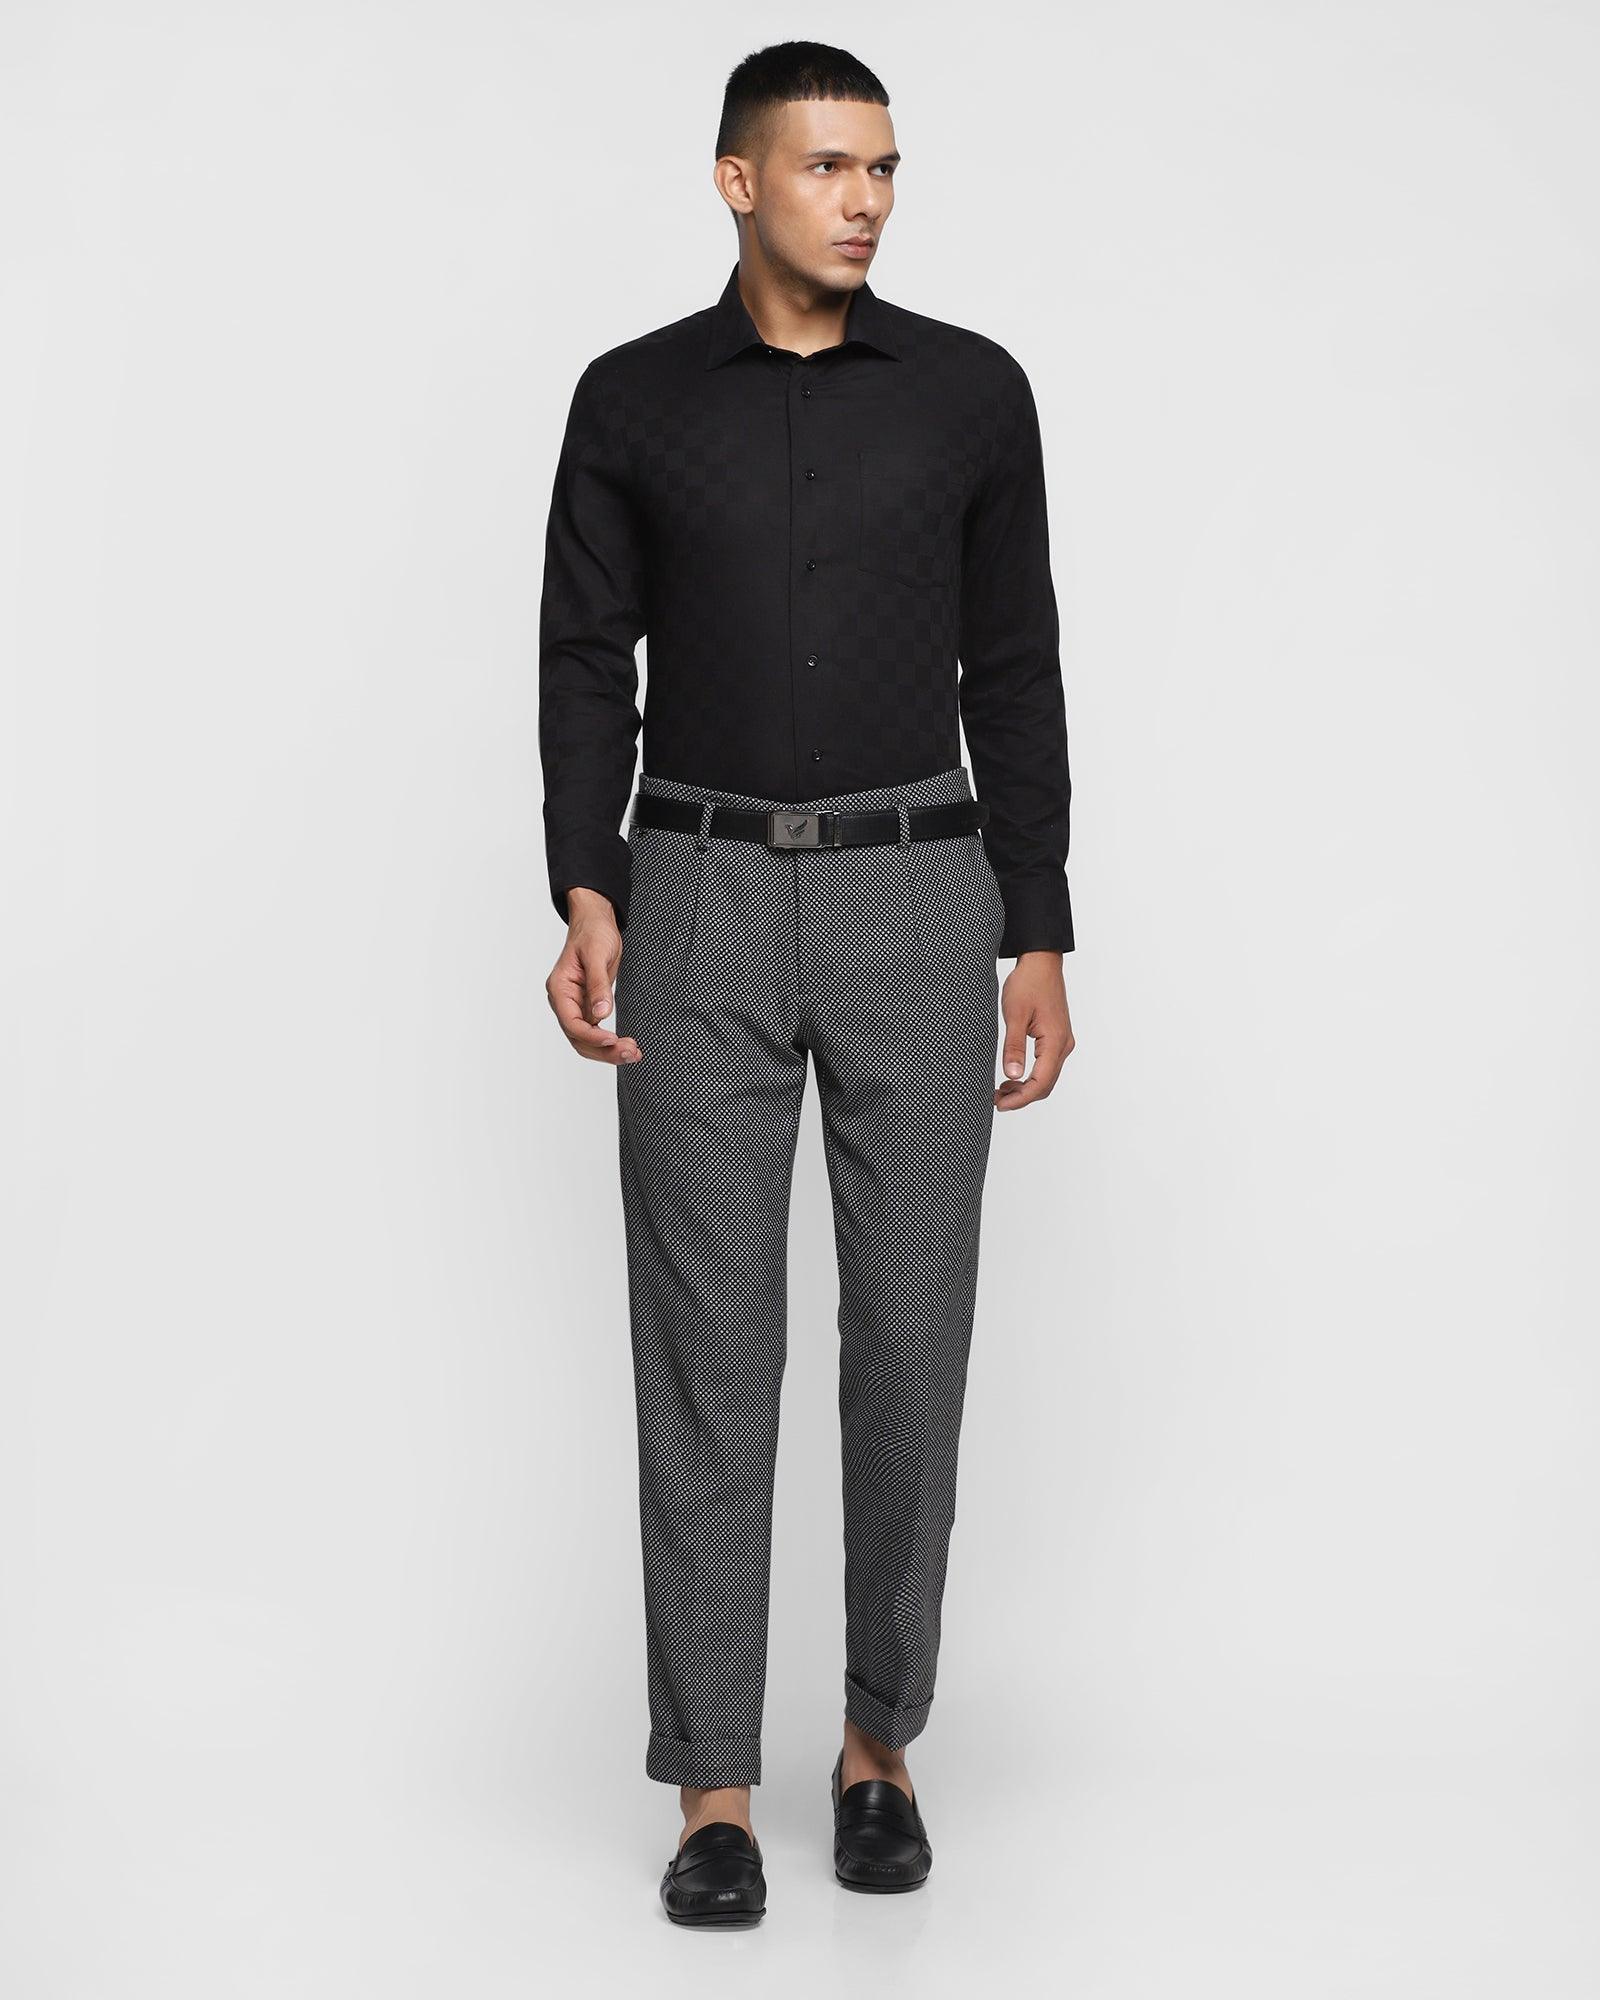 Formal Black Check Shirt - Lenox